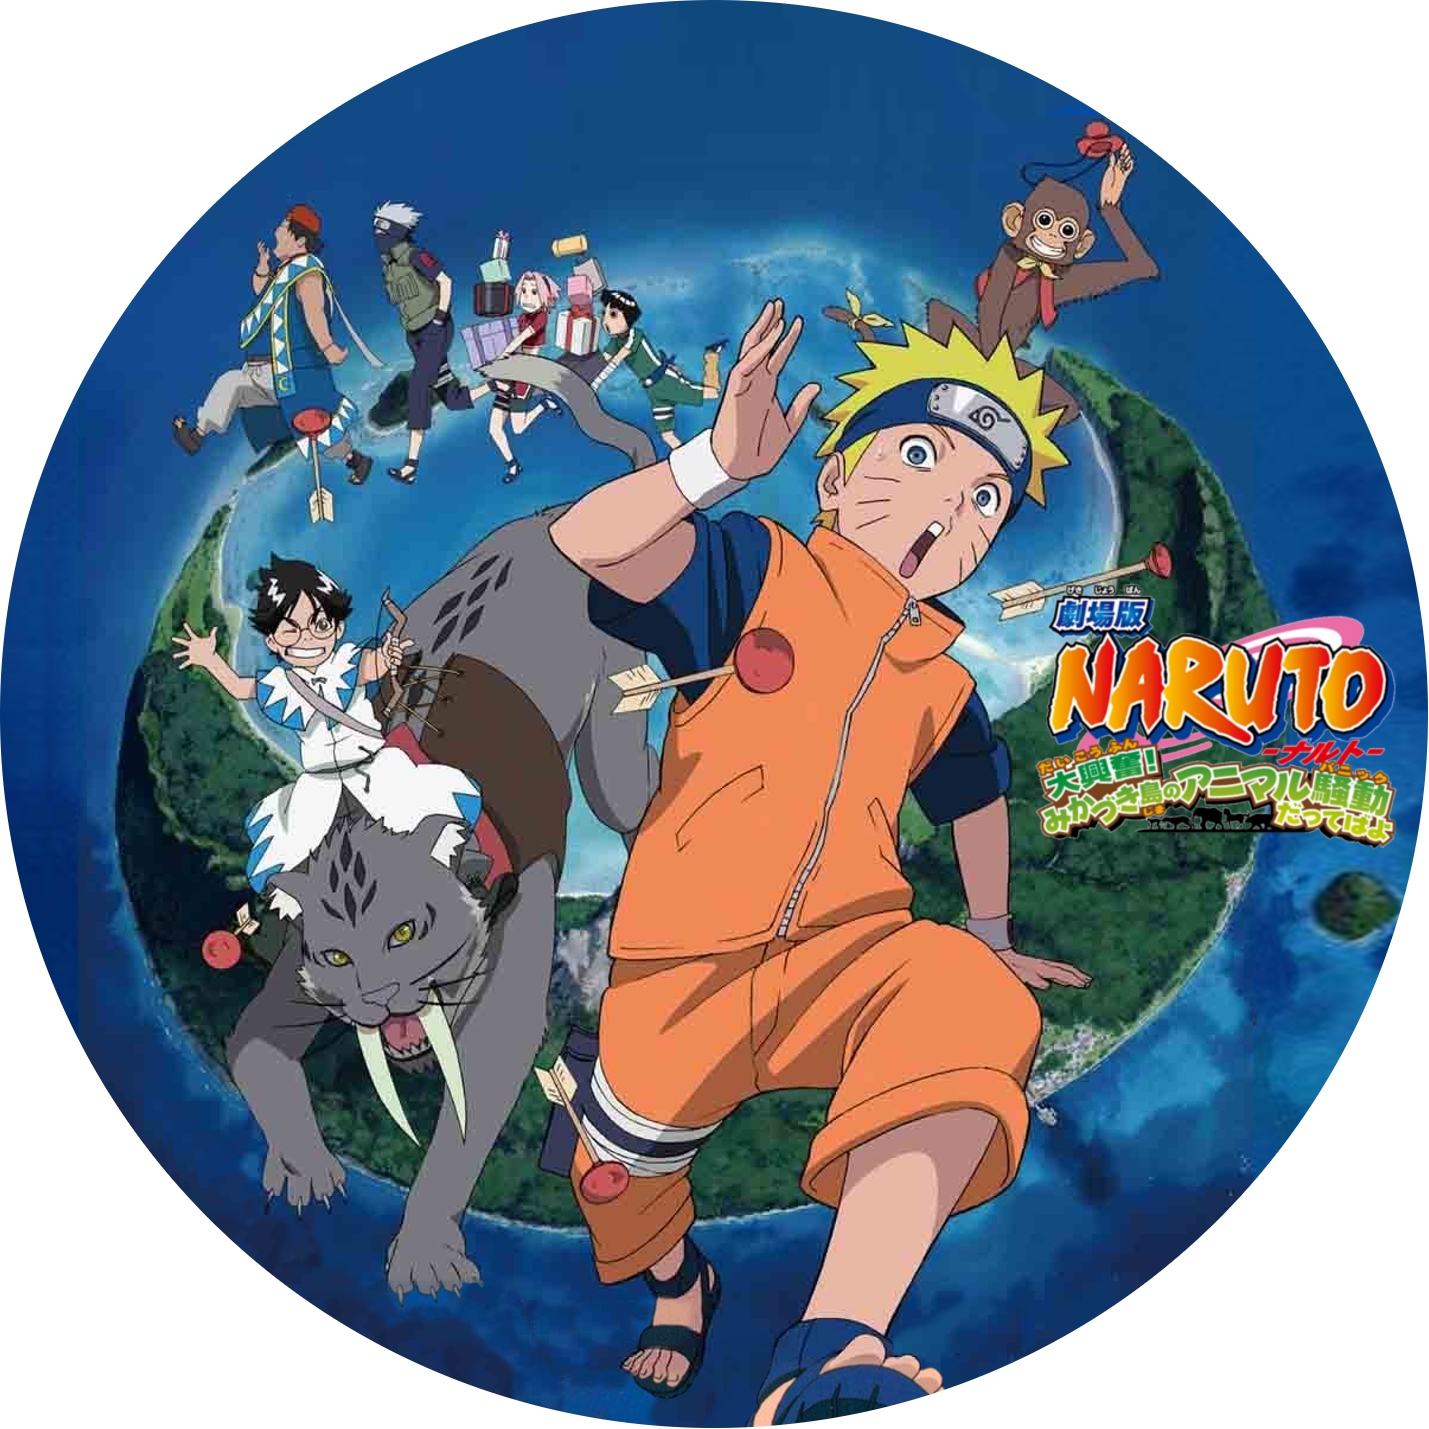 Naruto ナルト Tv第1期 劇場版1 3 のdvdラベルです Meechanmama みーちゃんママ の部屋